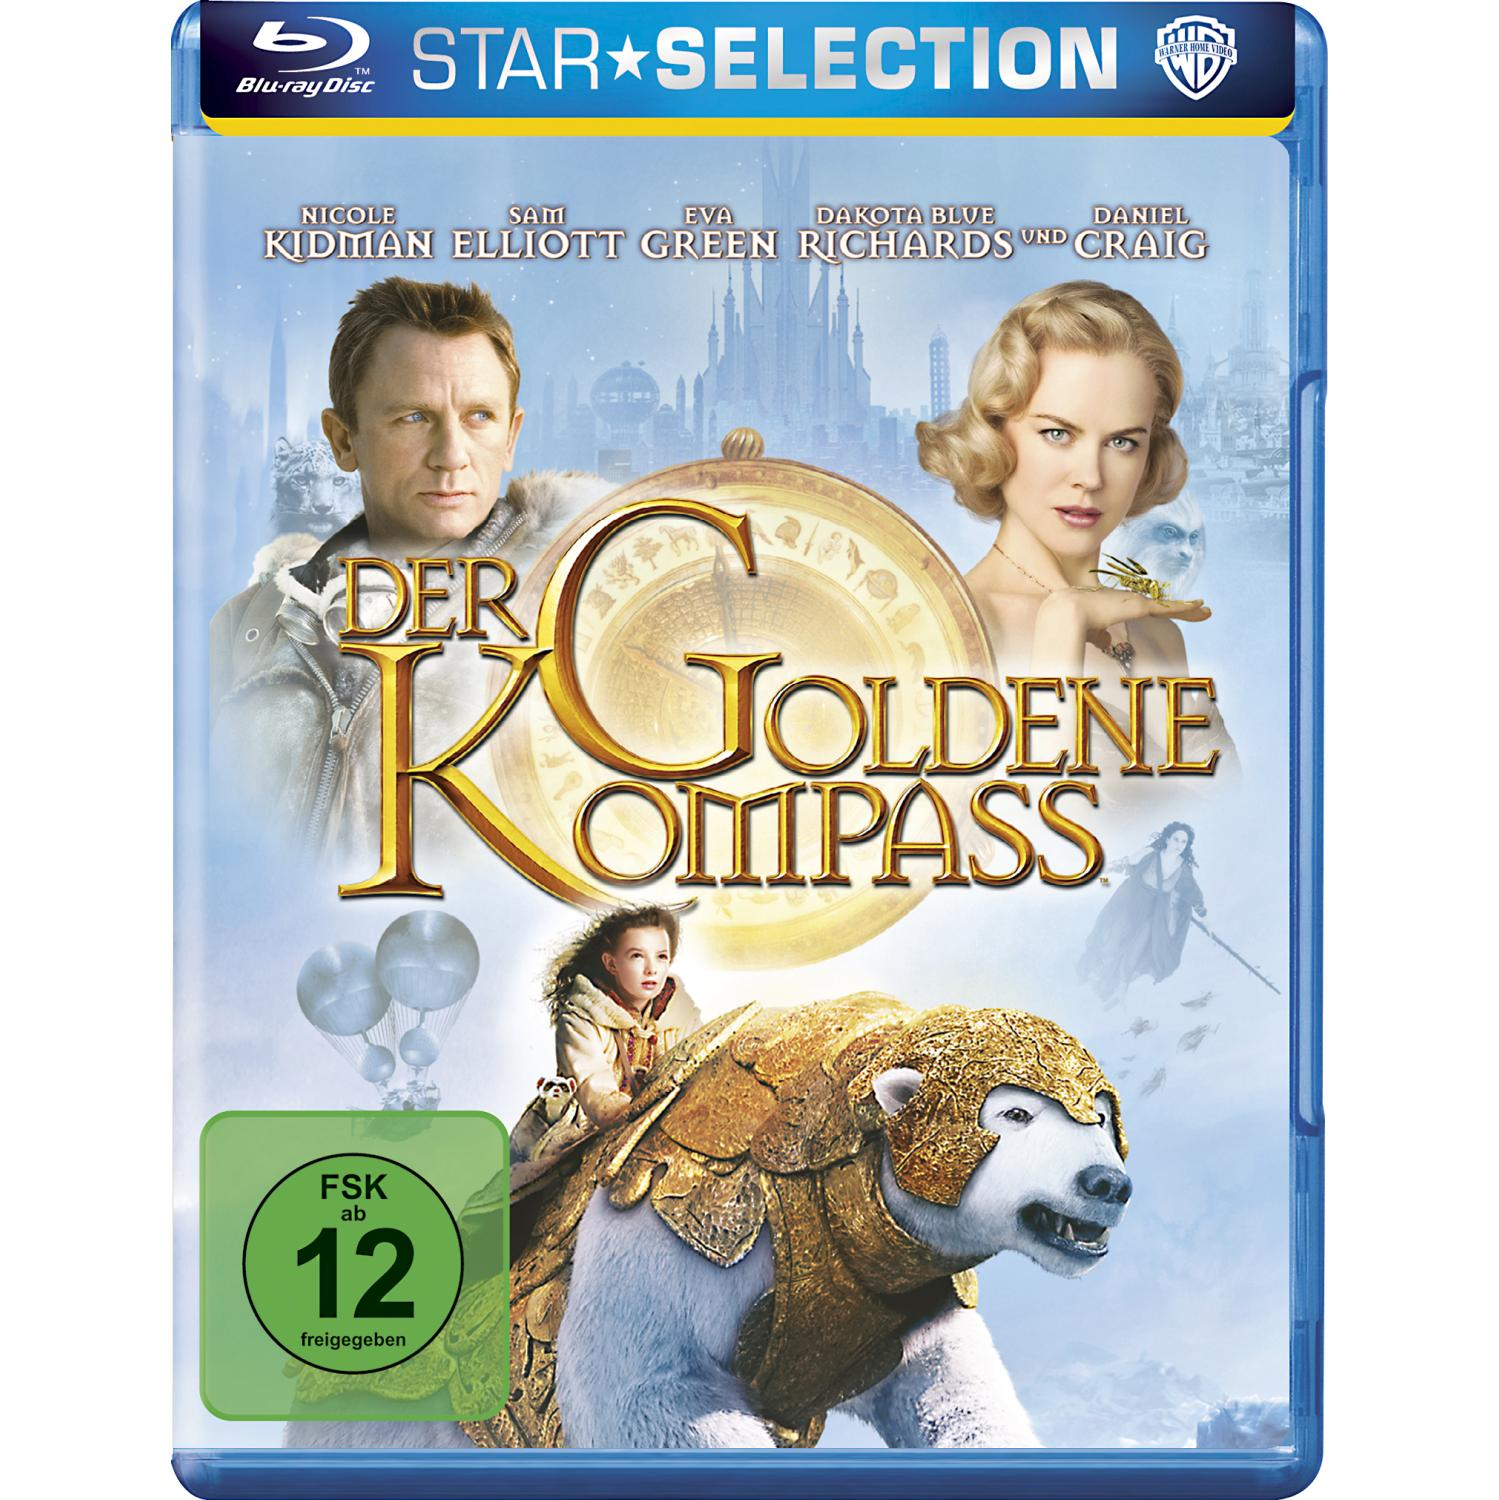 Kompass Goldene Der Blu-ray